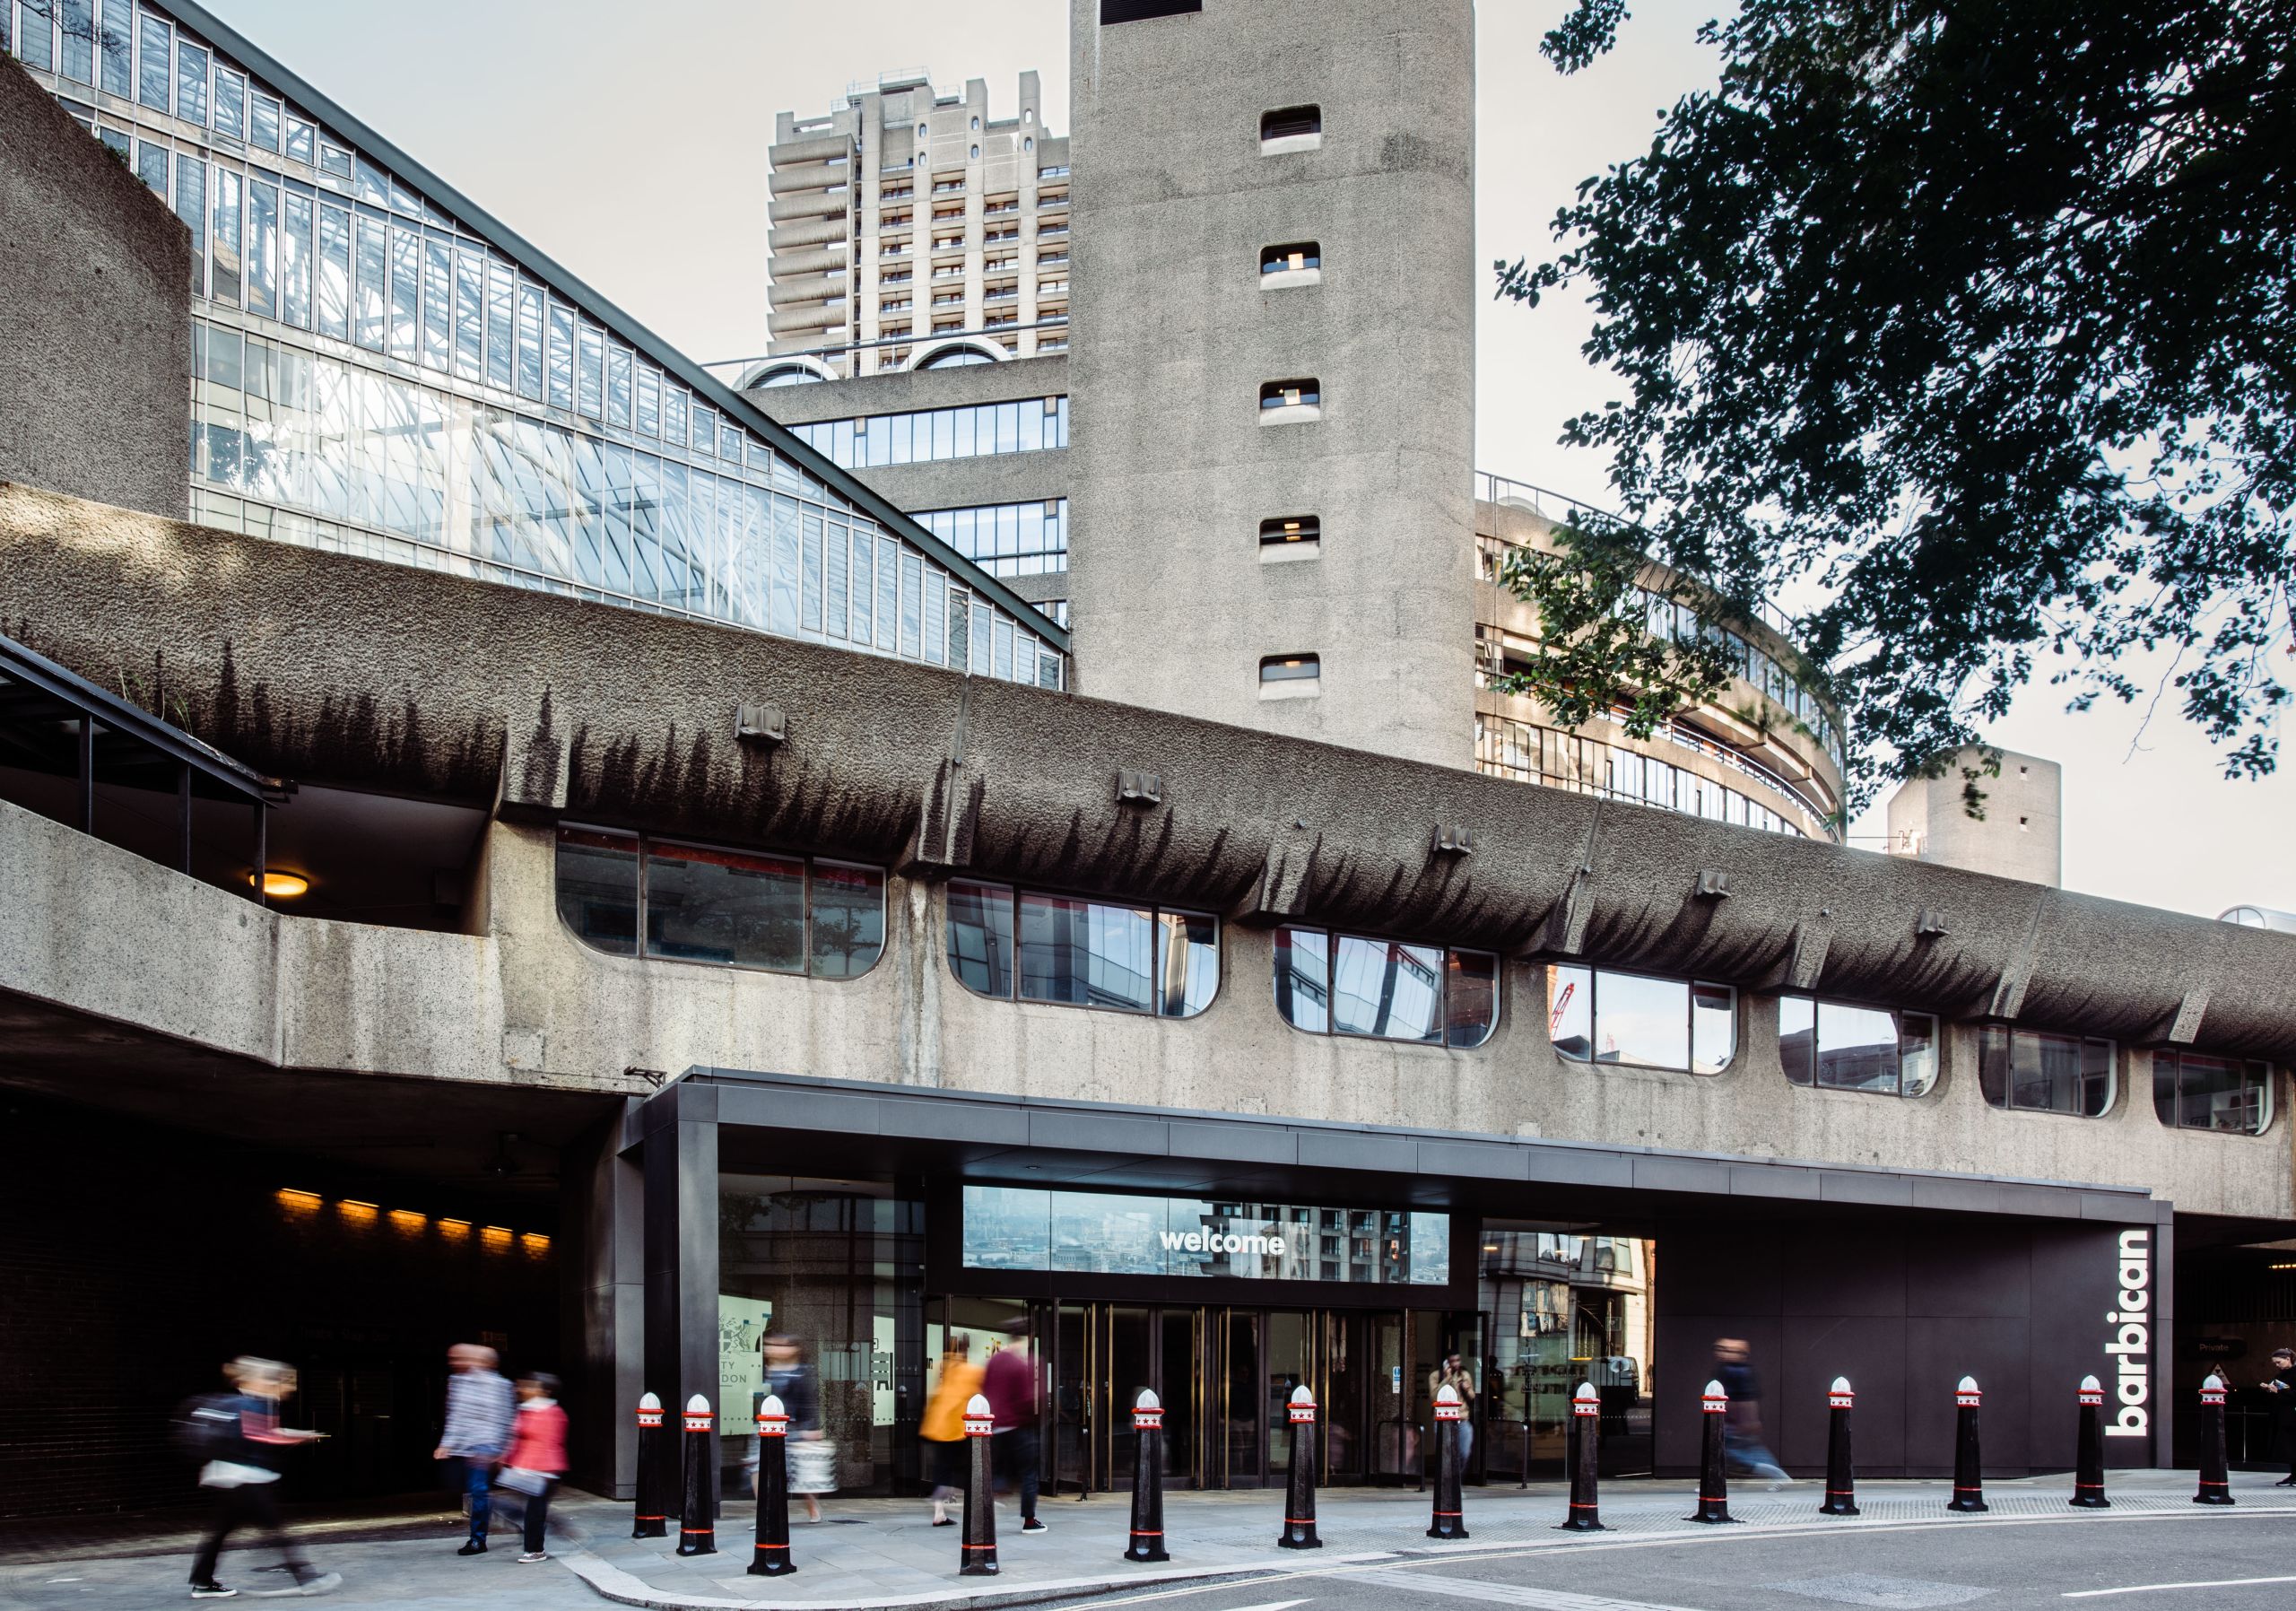 The Barbican Centre's main entrance